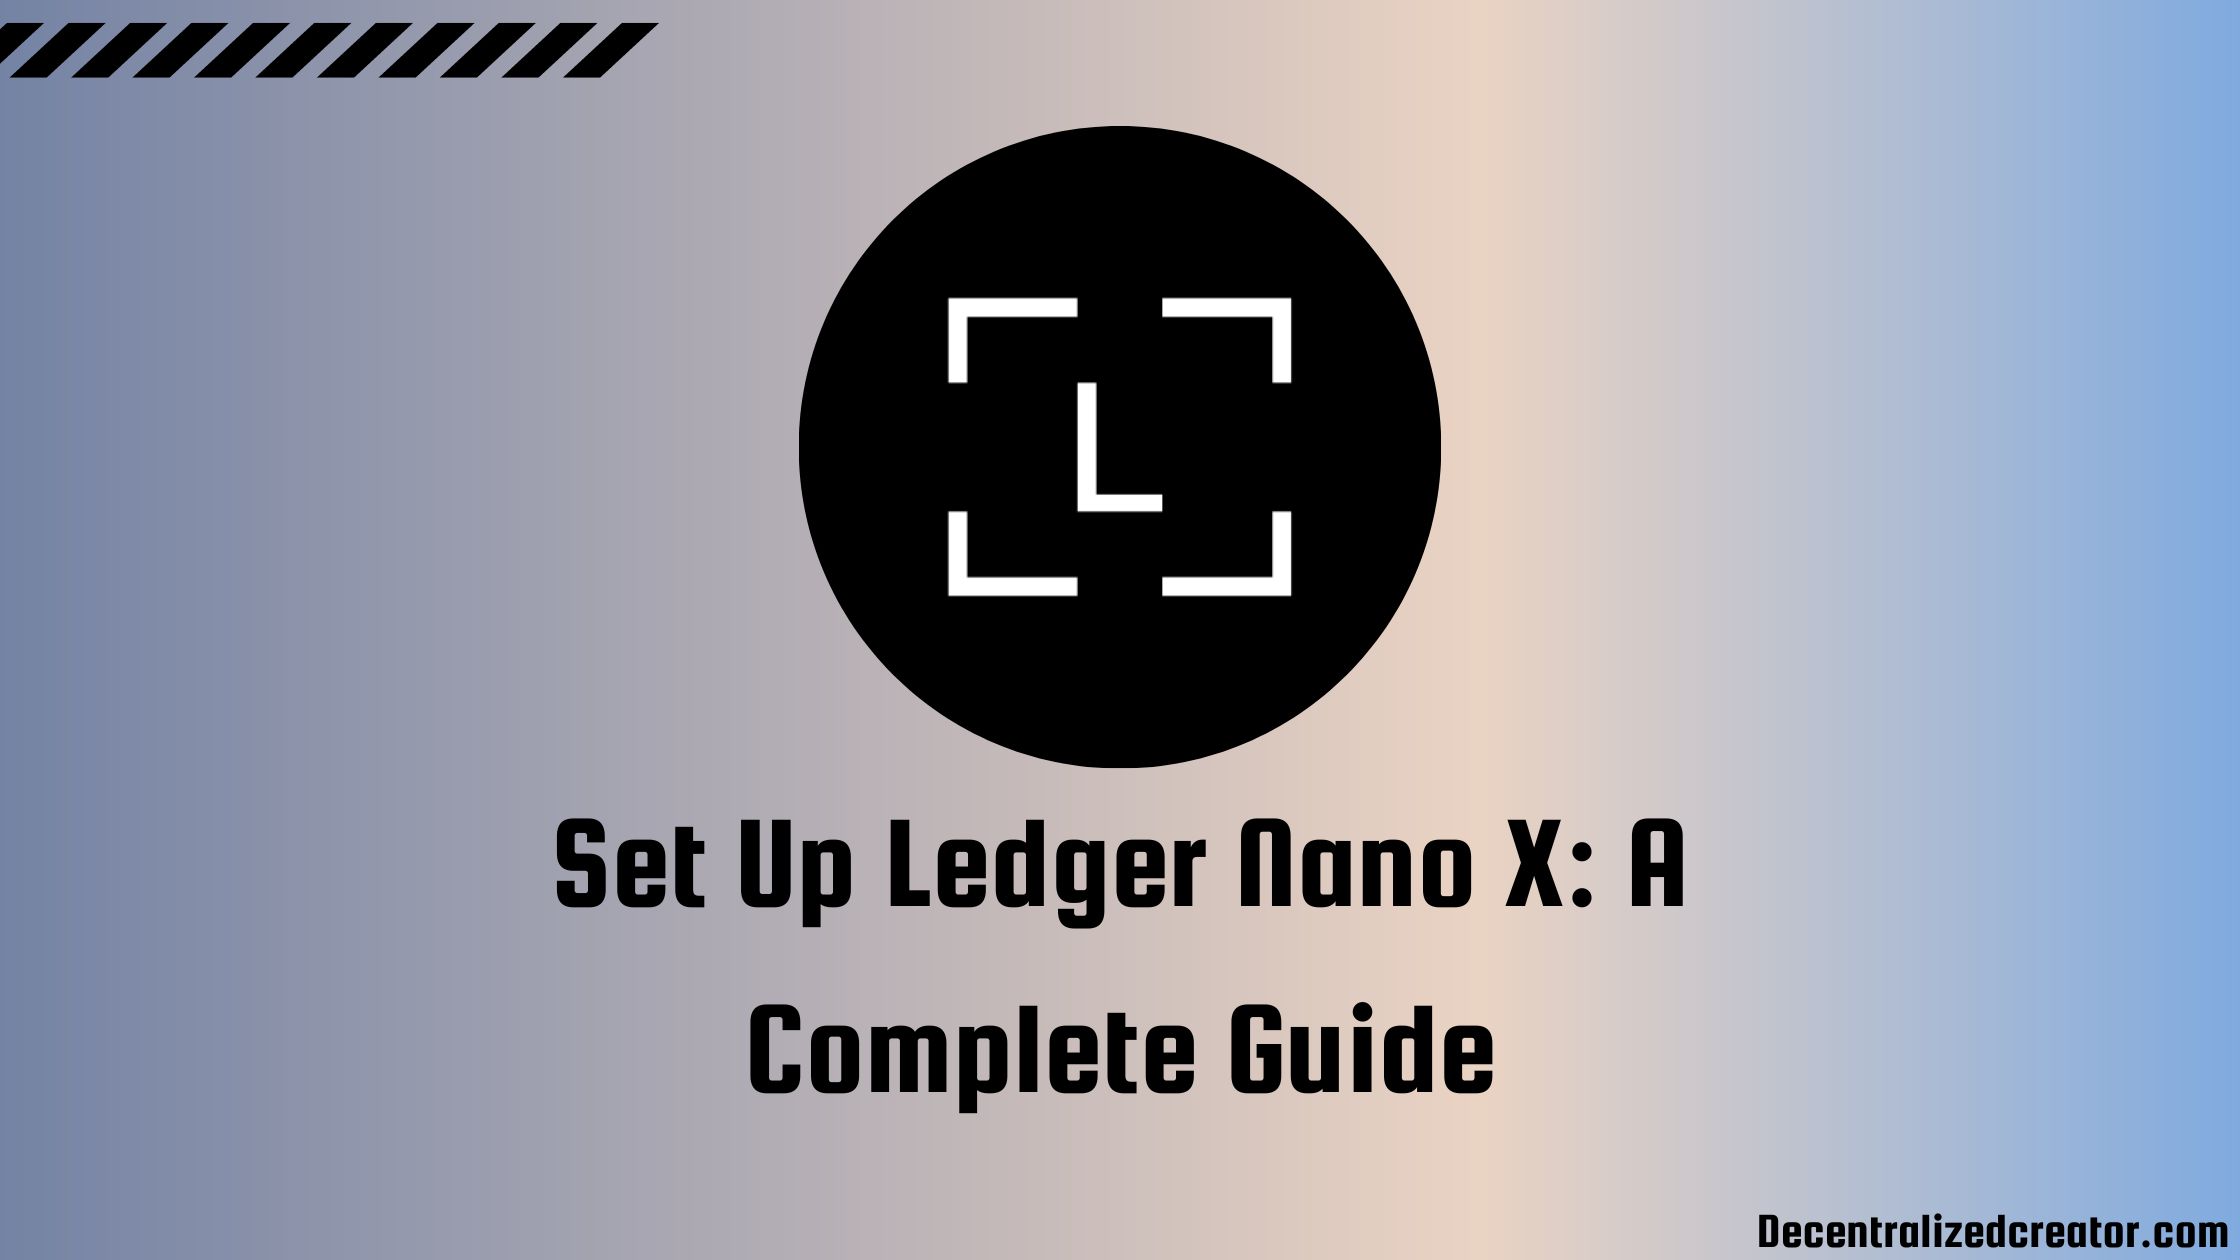 How to Set Up Ledger Nano X